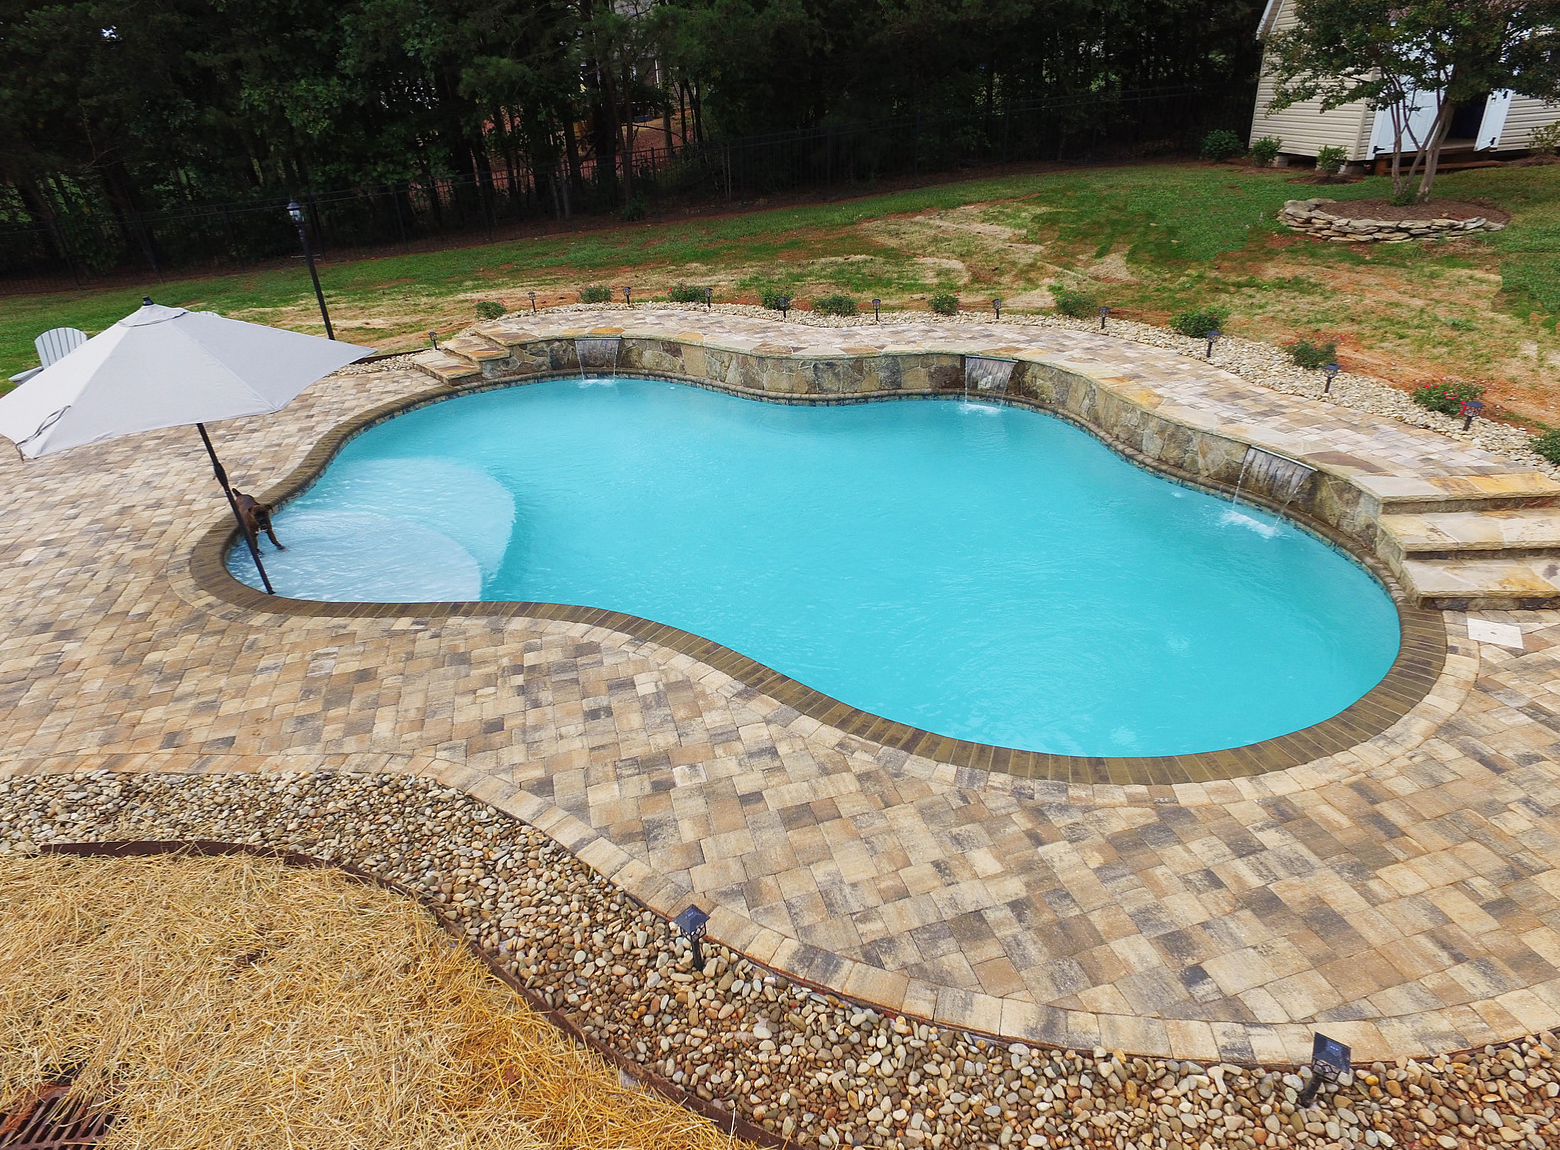 Install Custom Concrete Inground Pools in Huntersville North Carolina with CPC Pools 704-799-5236